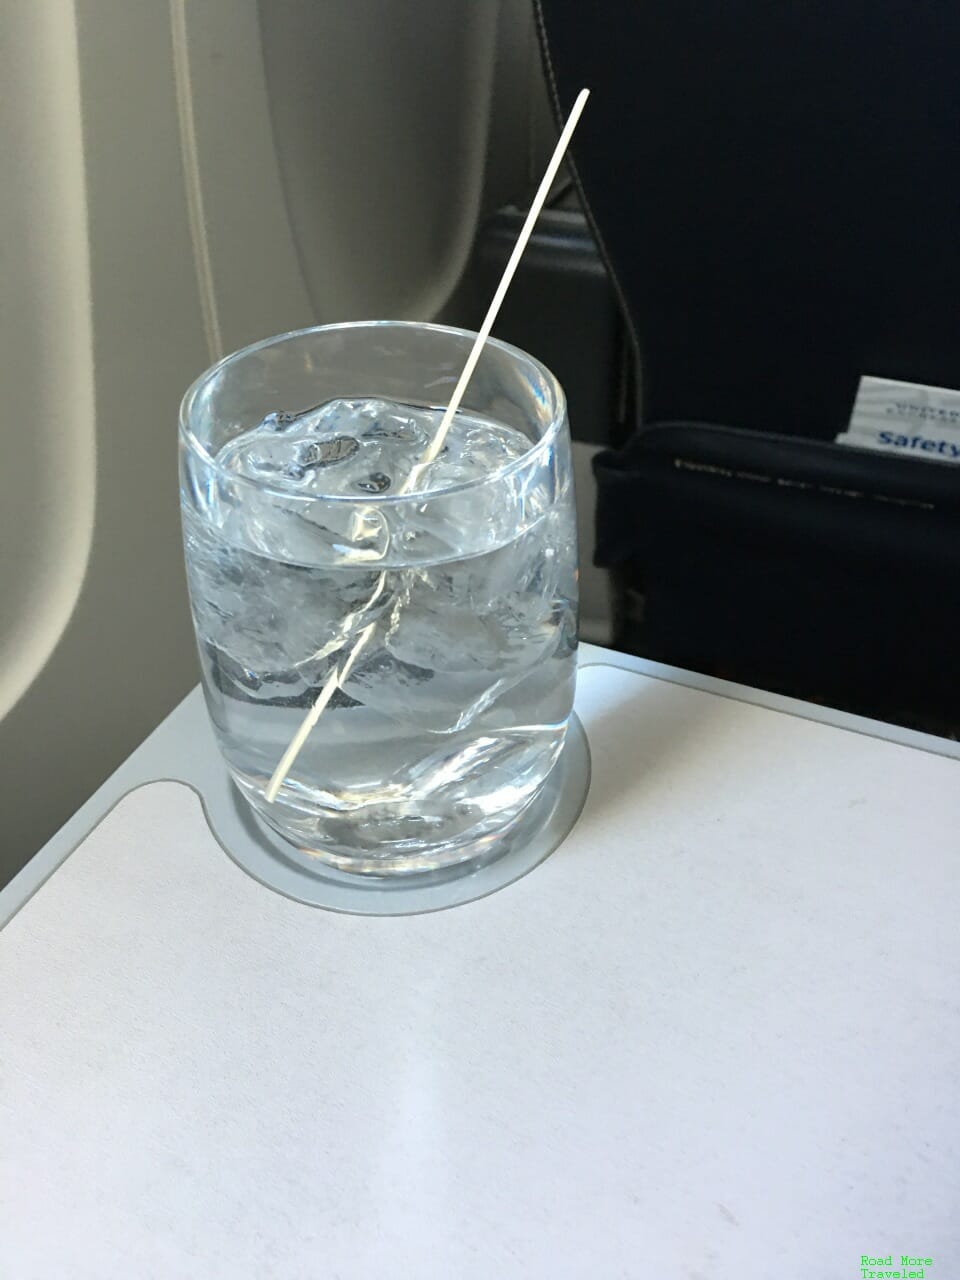 United CRJ-550 First Class beverage